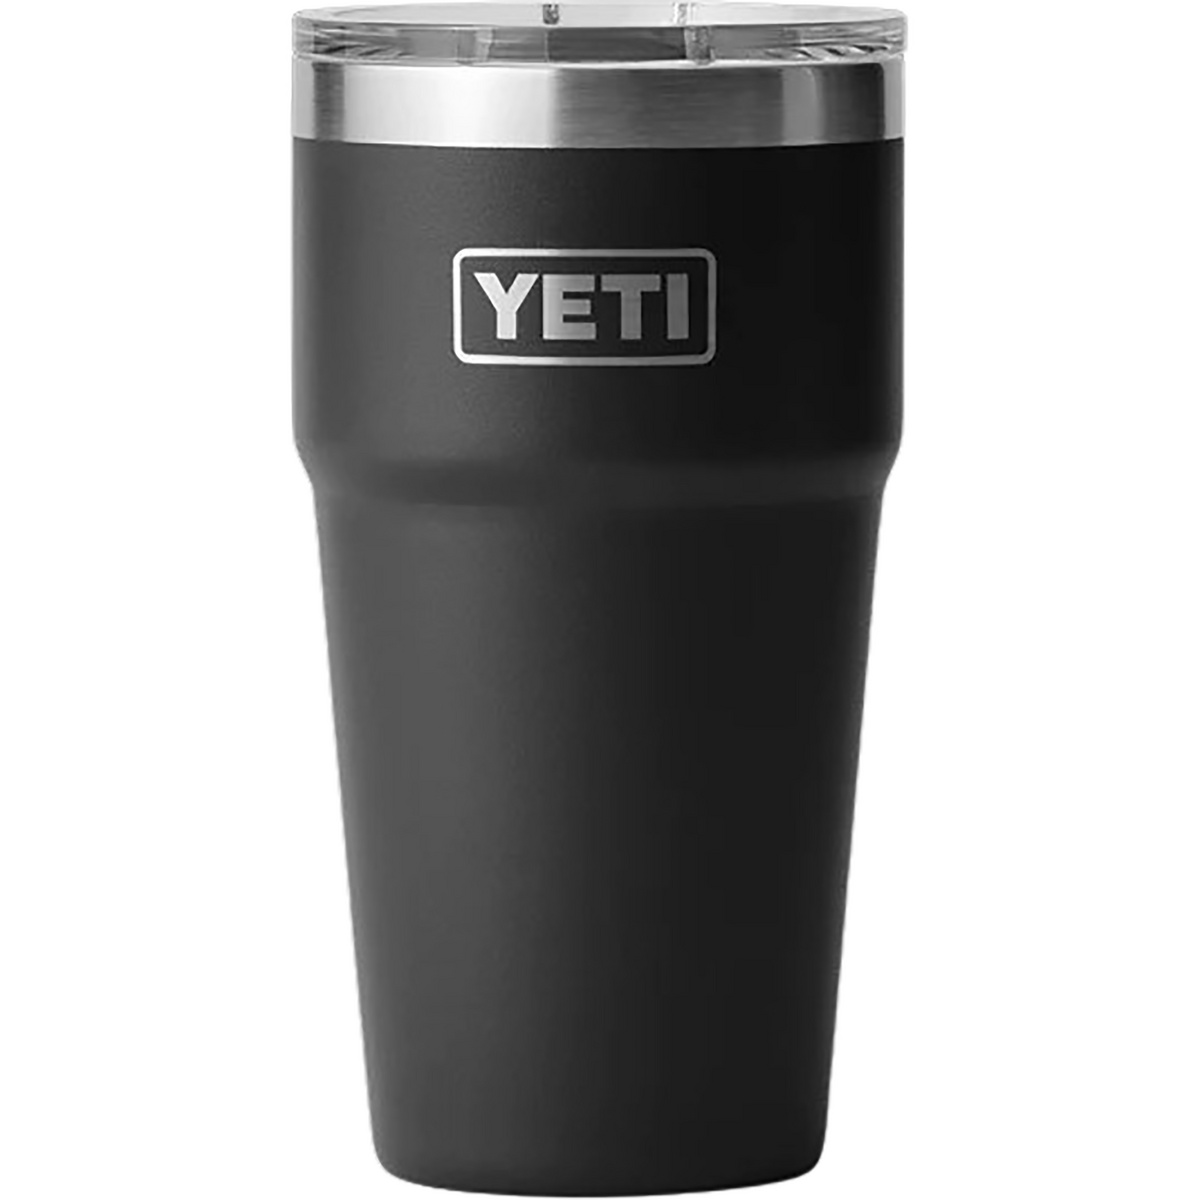 Yeti Coolers Single 16oz Stackable Tasse von Yeti Coolers